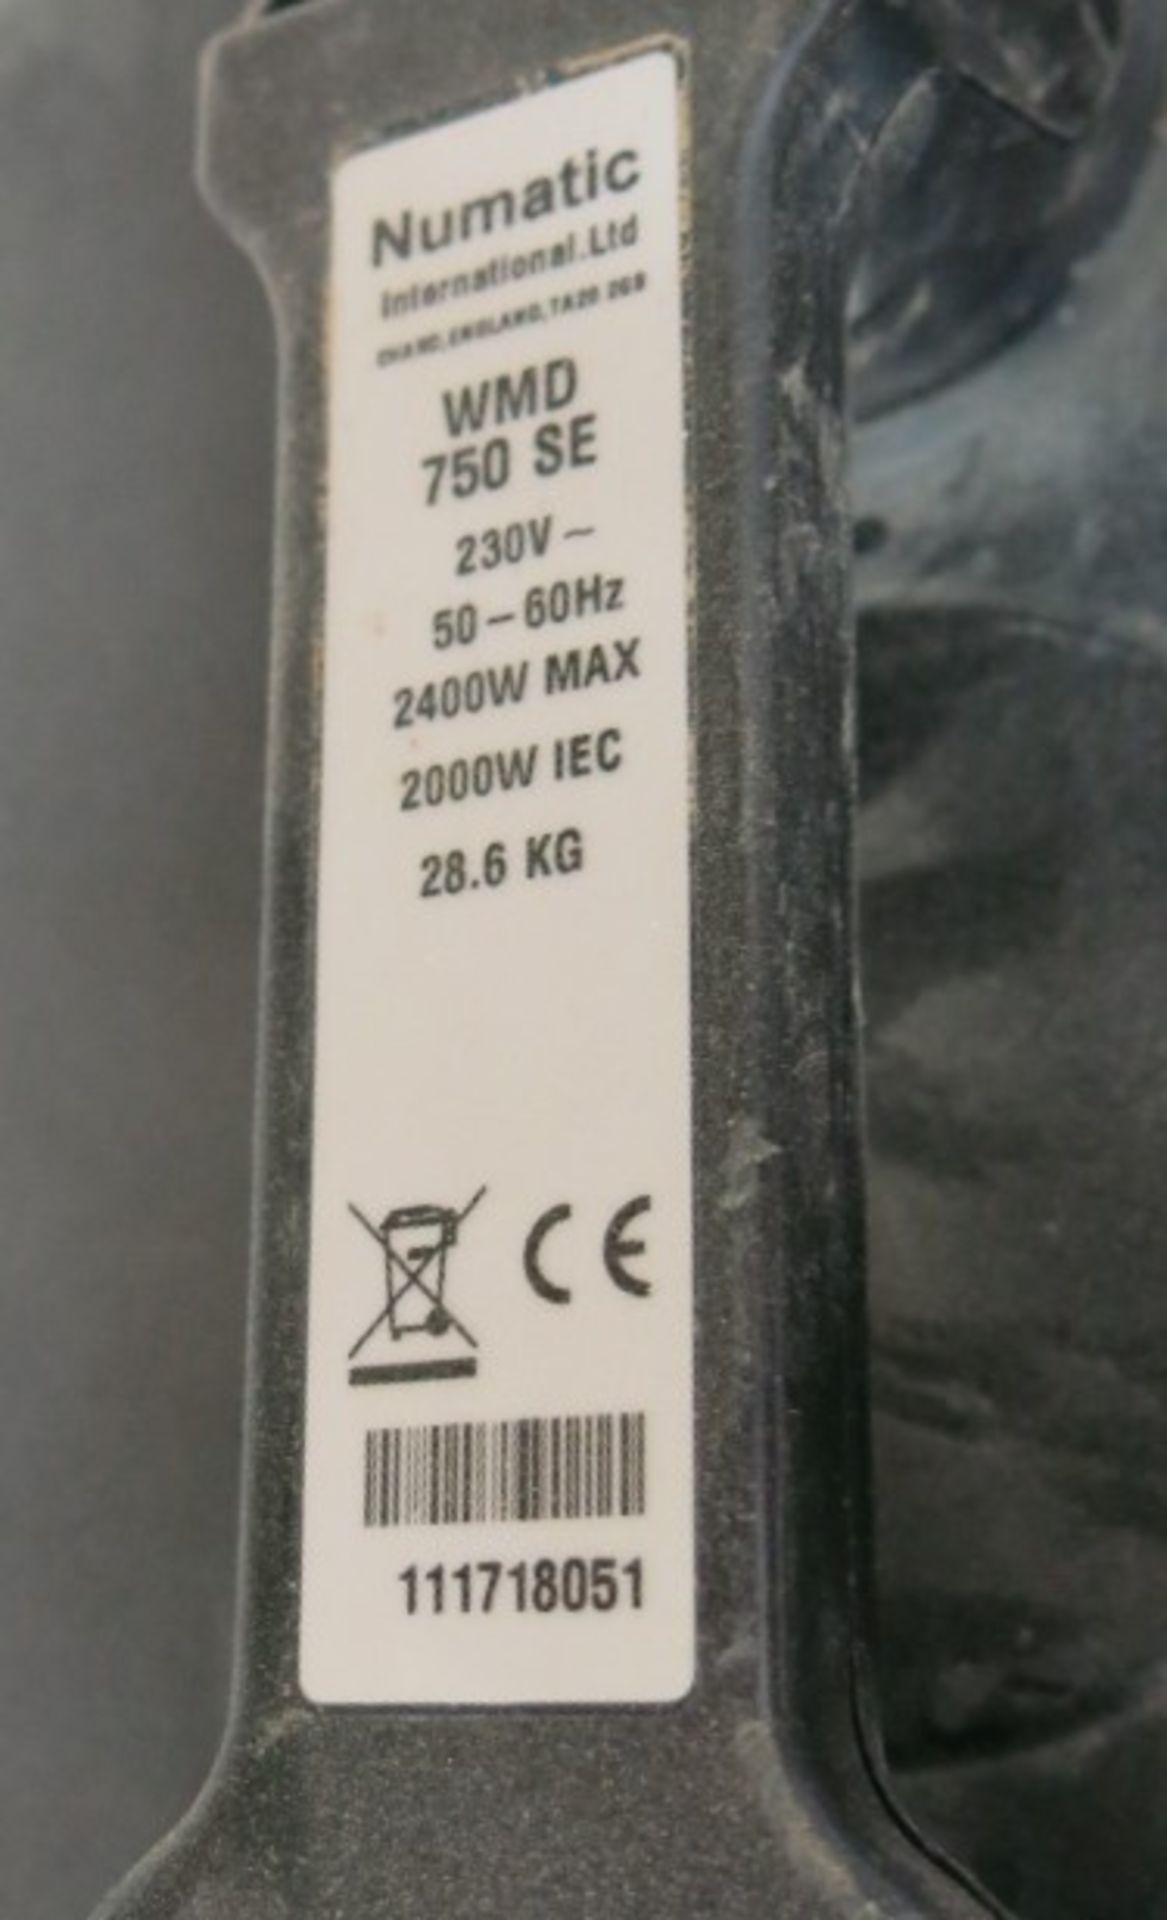 Numatic WMD 750 SE workshop vacuum - Image 2 of 2